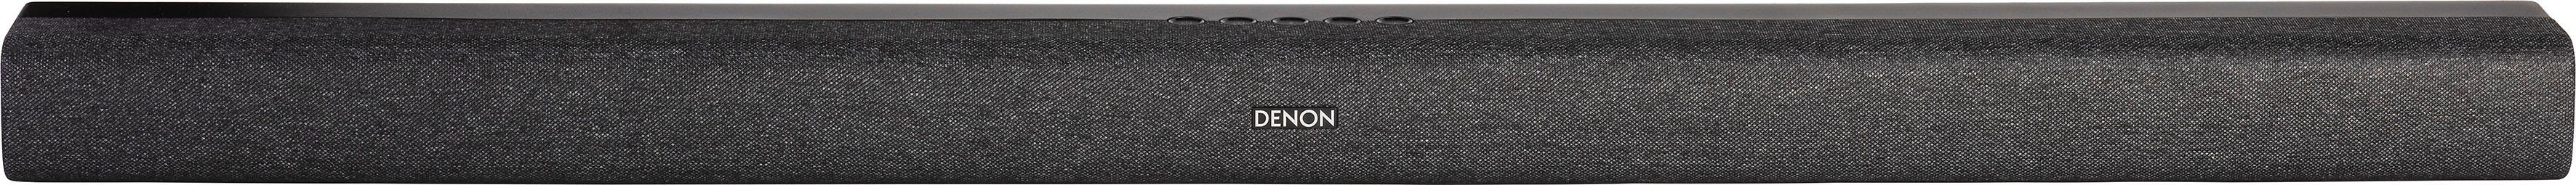 Denon DHT-S416 2.1 Soundbar (Bluetooth, Subwoofer, ARC) HDMI Chromecast, kabelloser